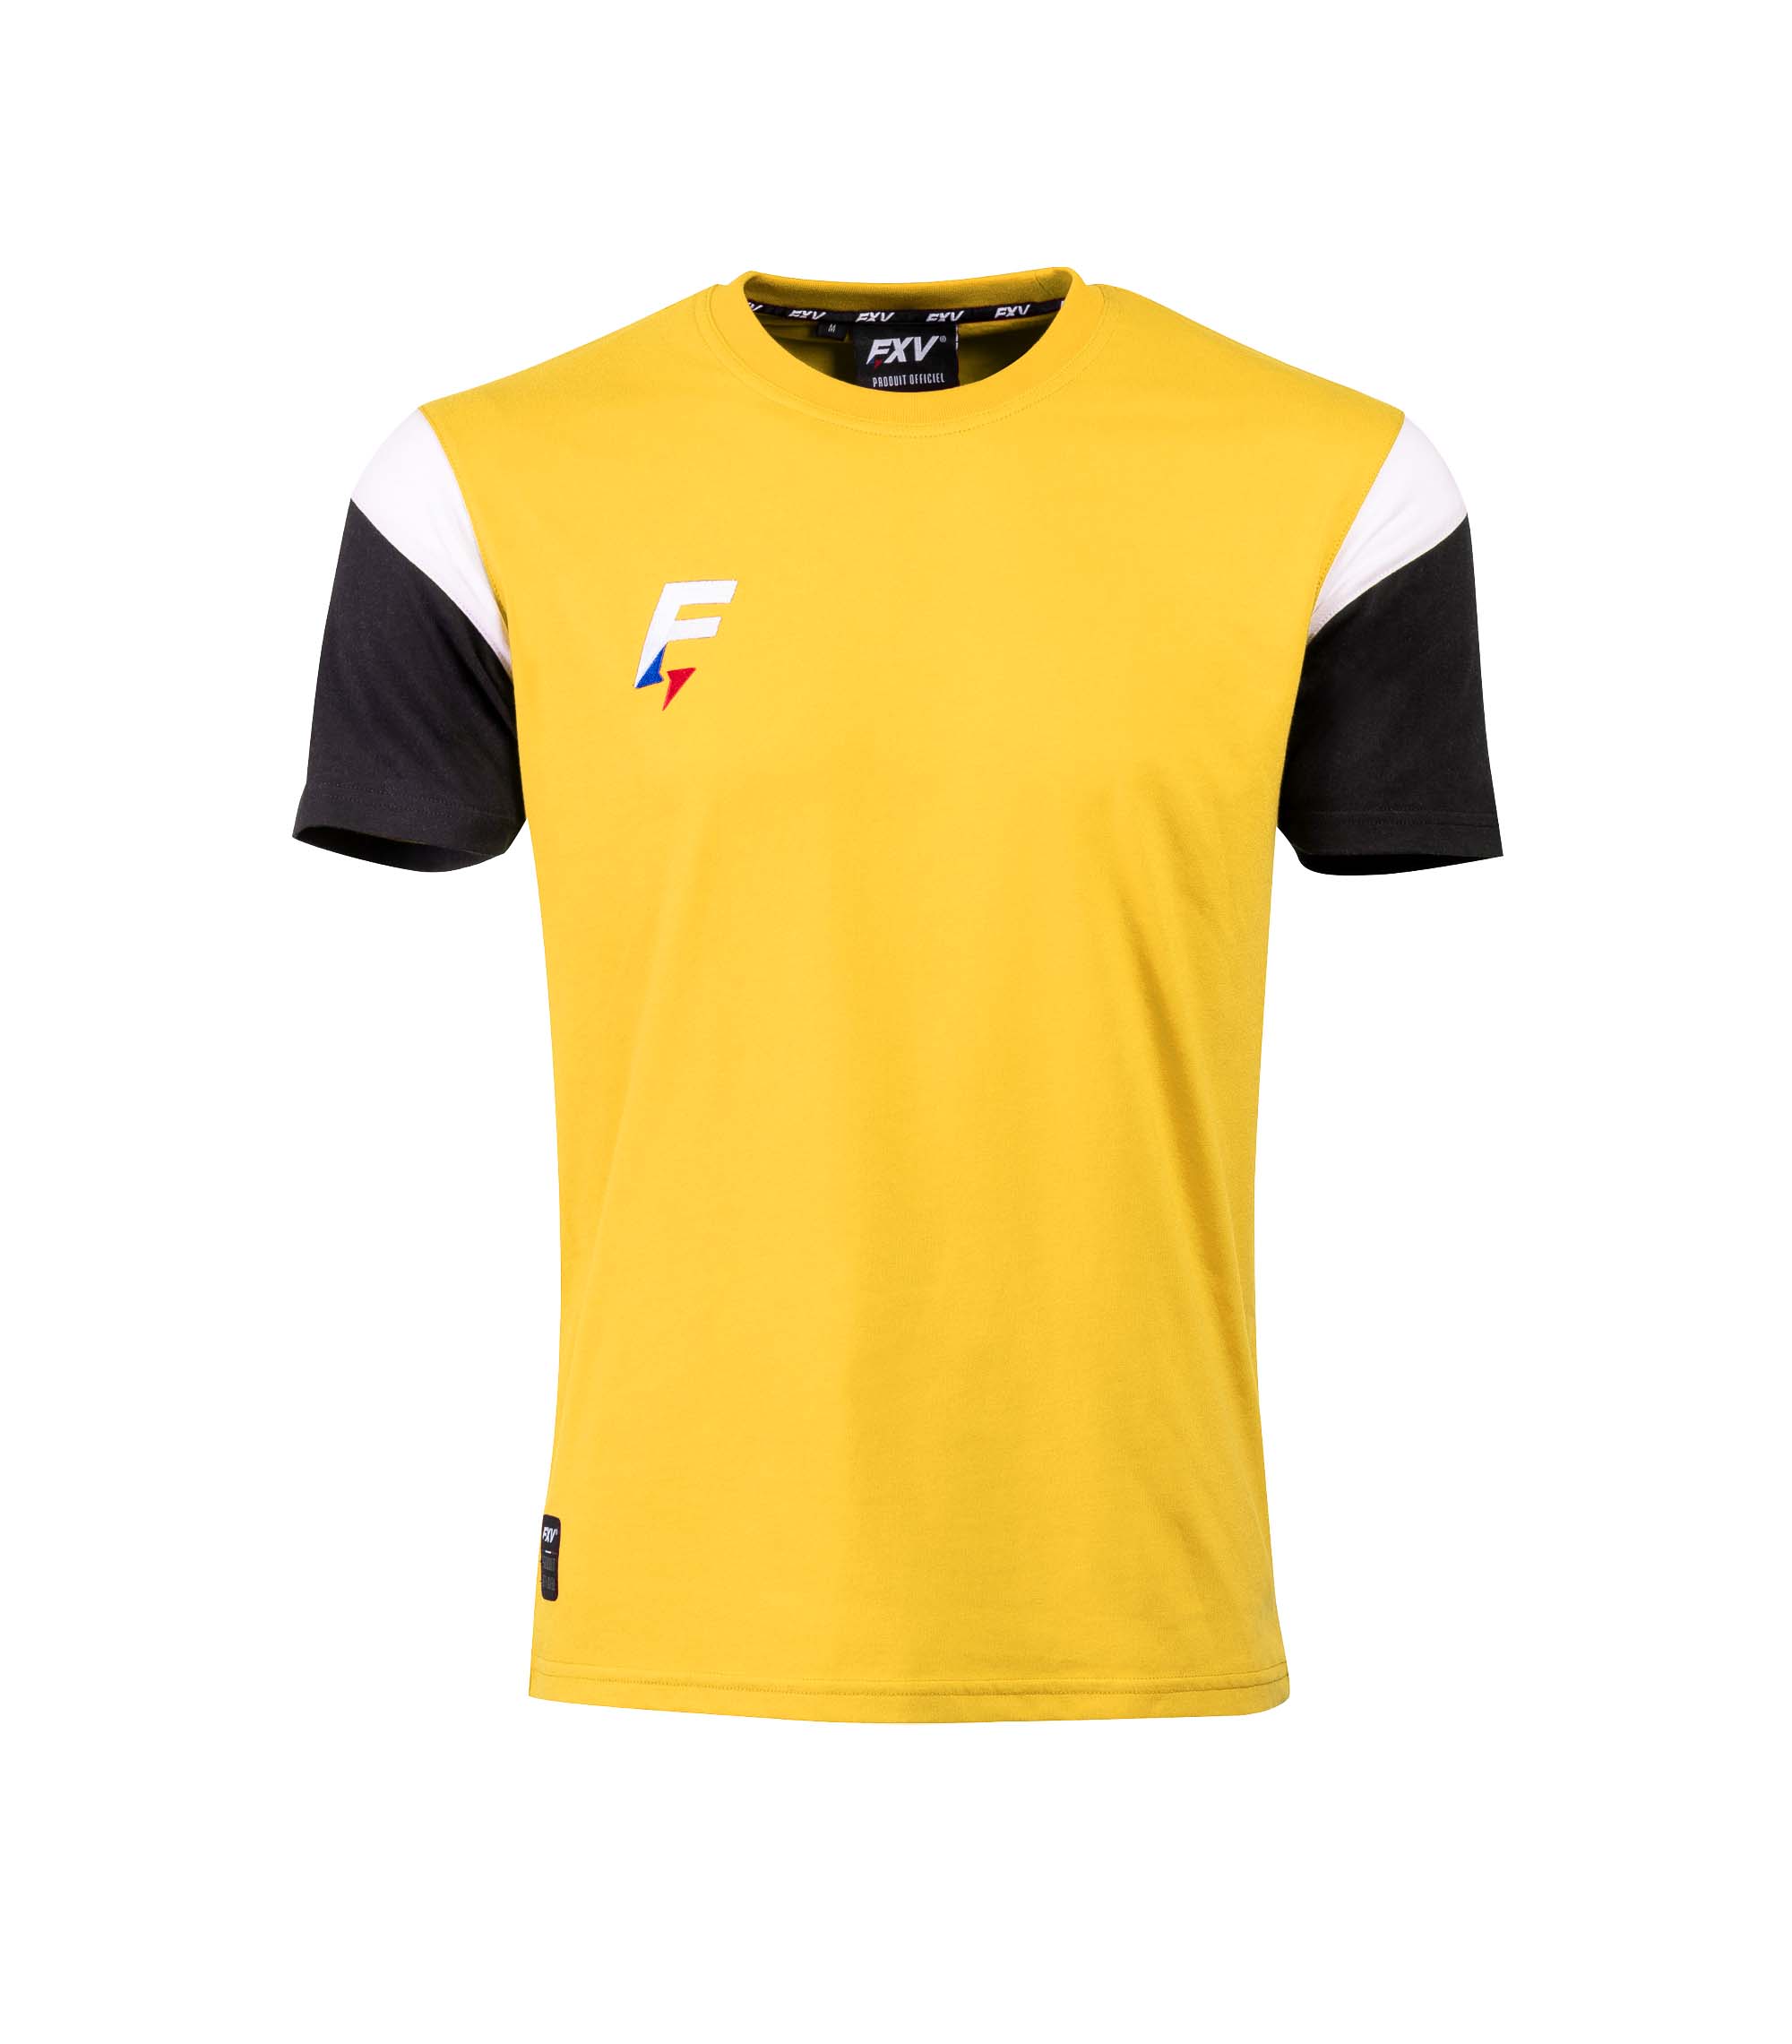 FORCE-XV_tee-shirt_de_rugby_conquete_jaune_noir_F30CONQUETEJBN_sgequipement_sg_equipement